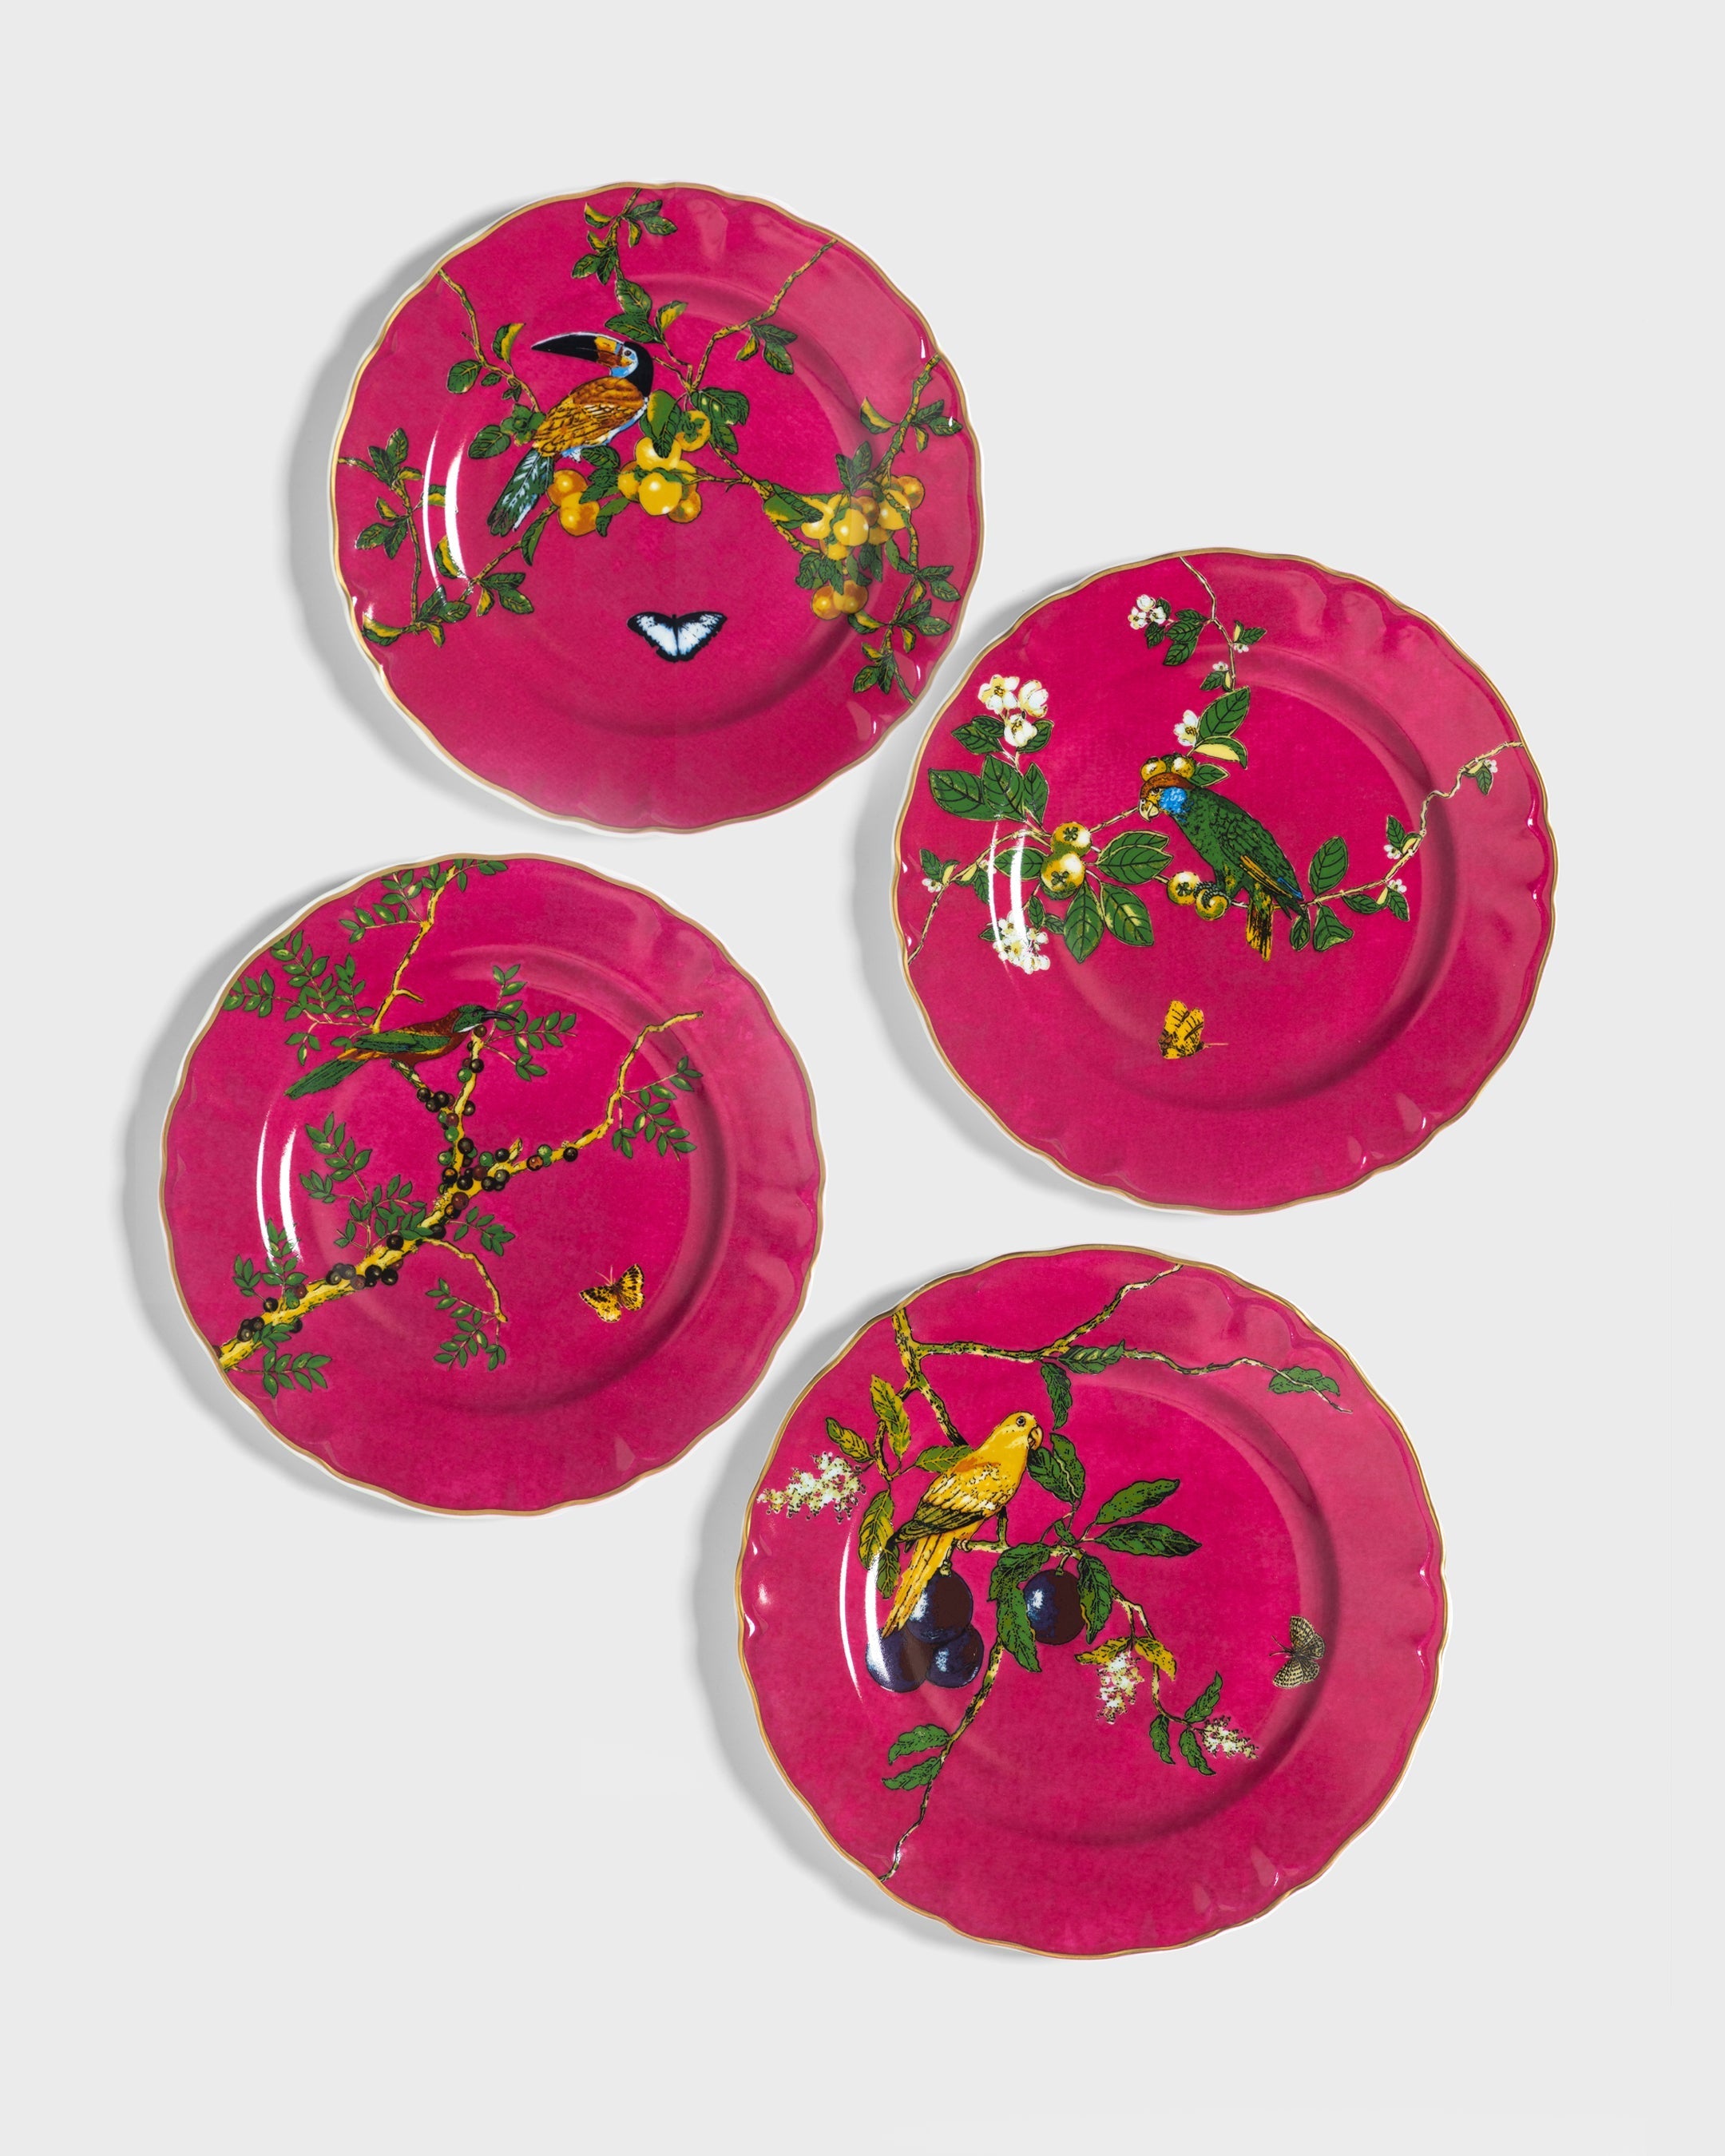 Dessert Plate Passaros do Brasil Pink (4) - Tania Bulhões